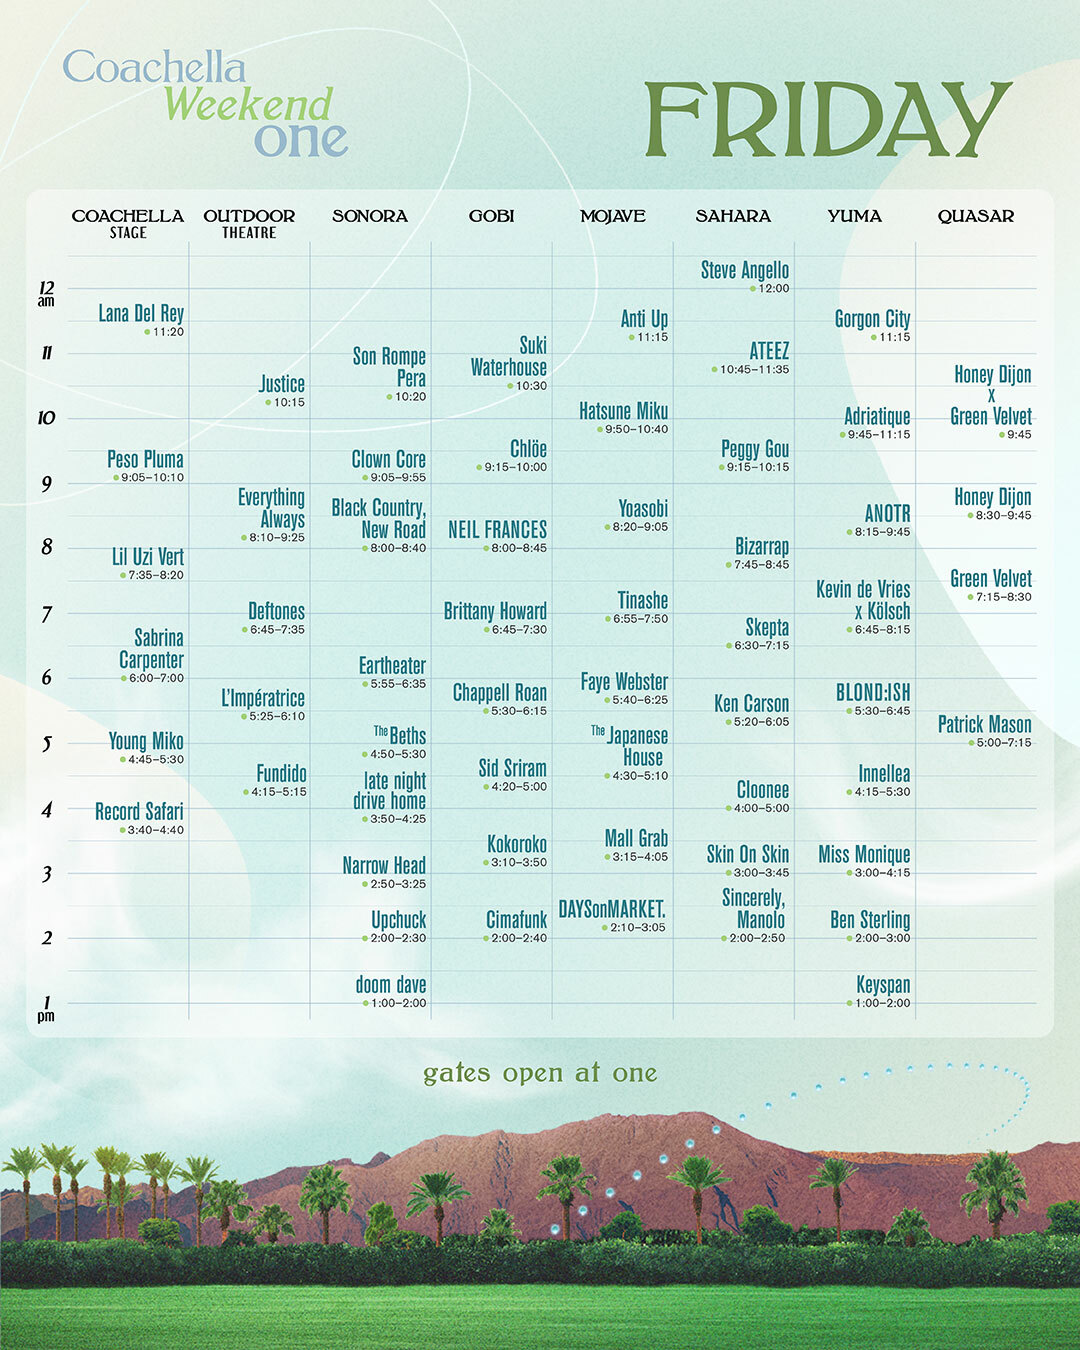 Coachella weekend schedule on one Friday